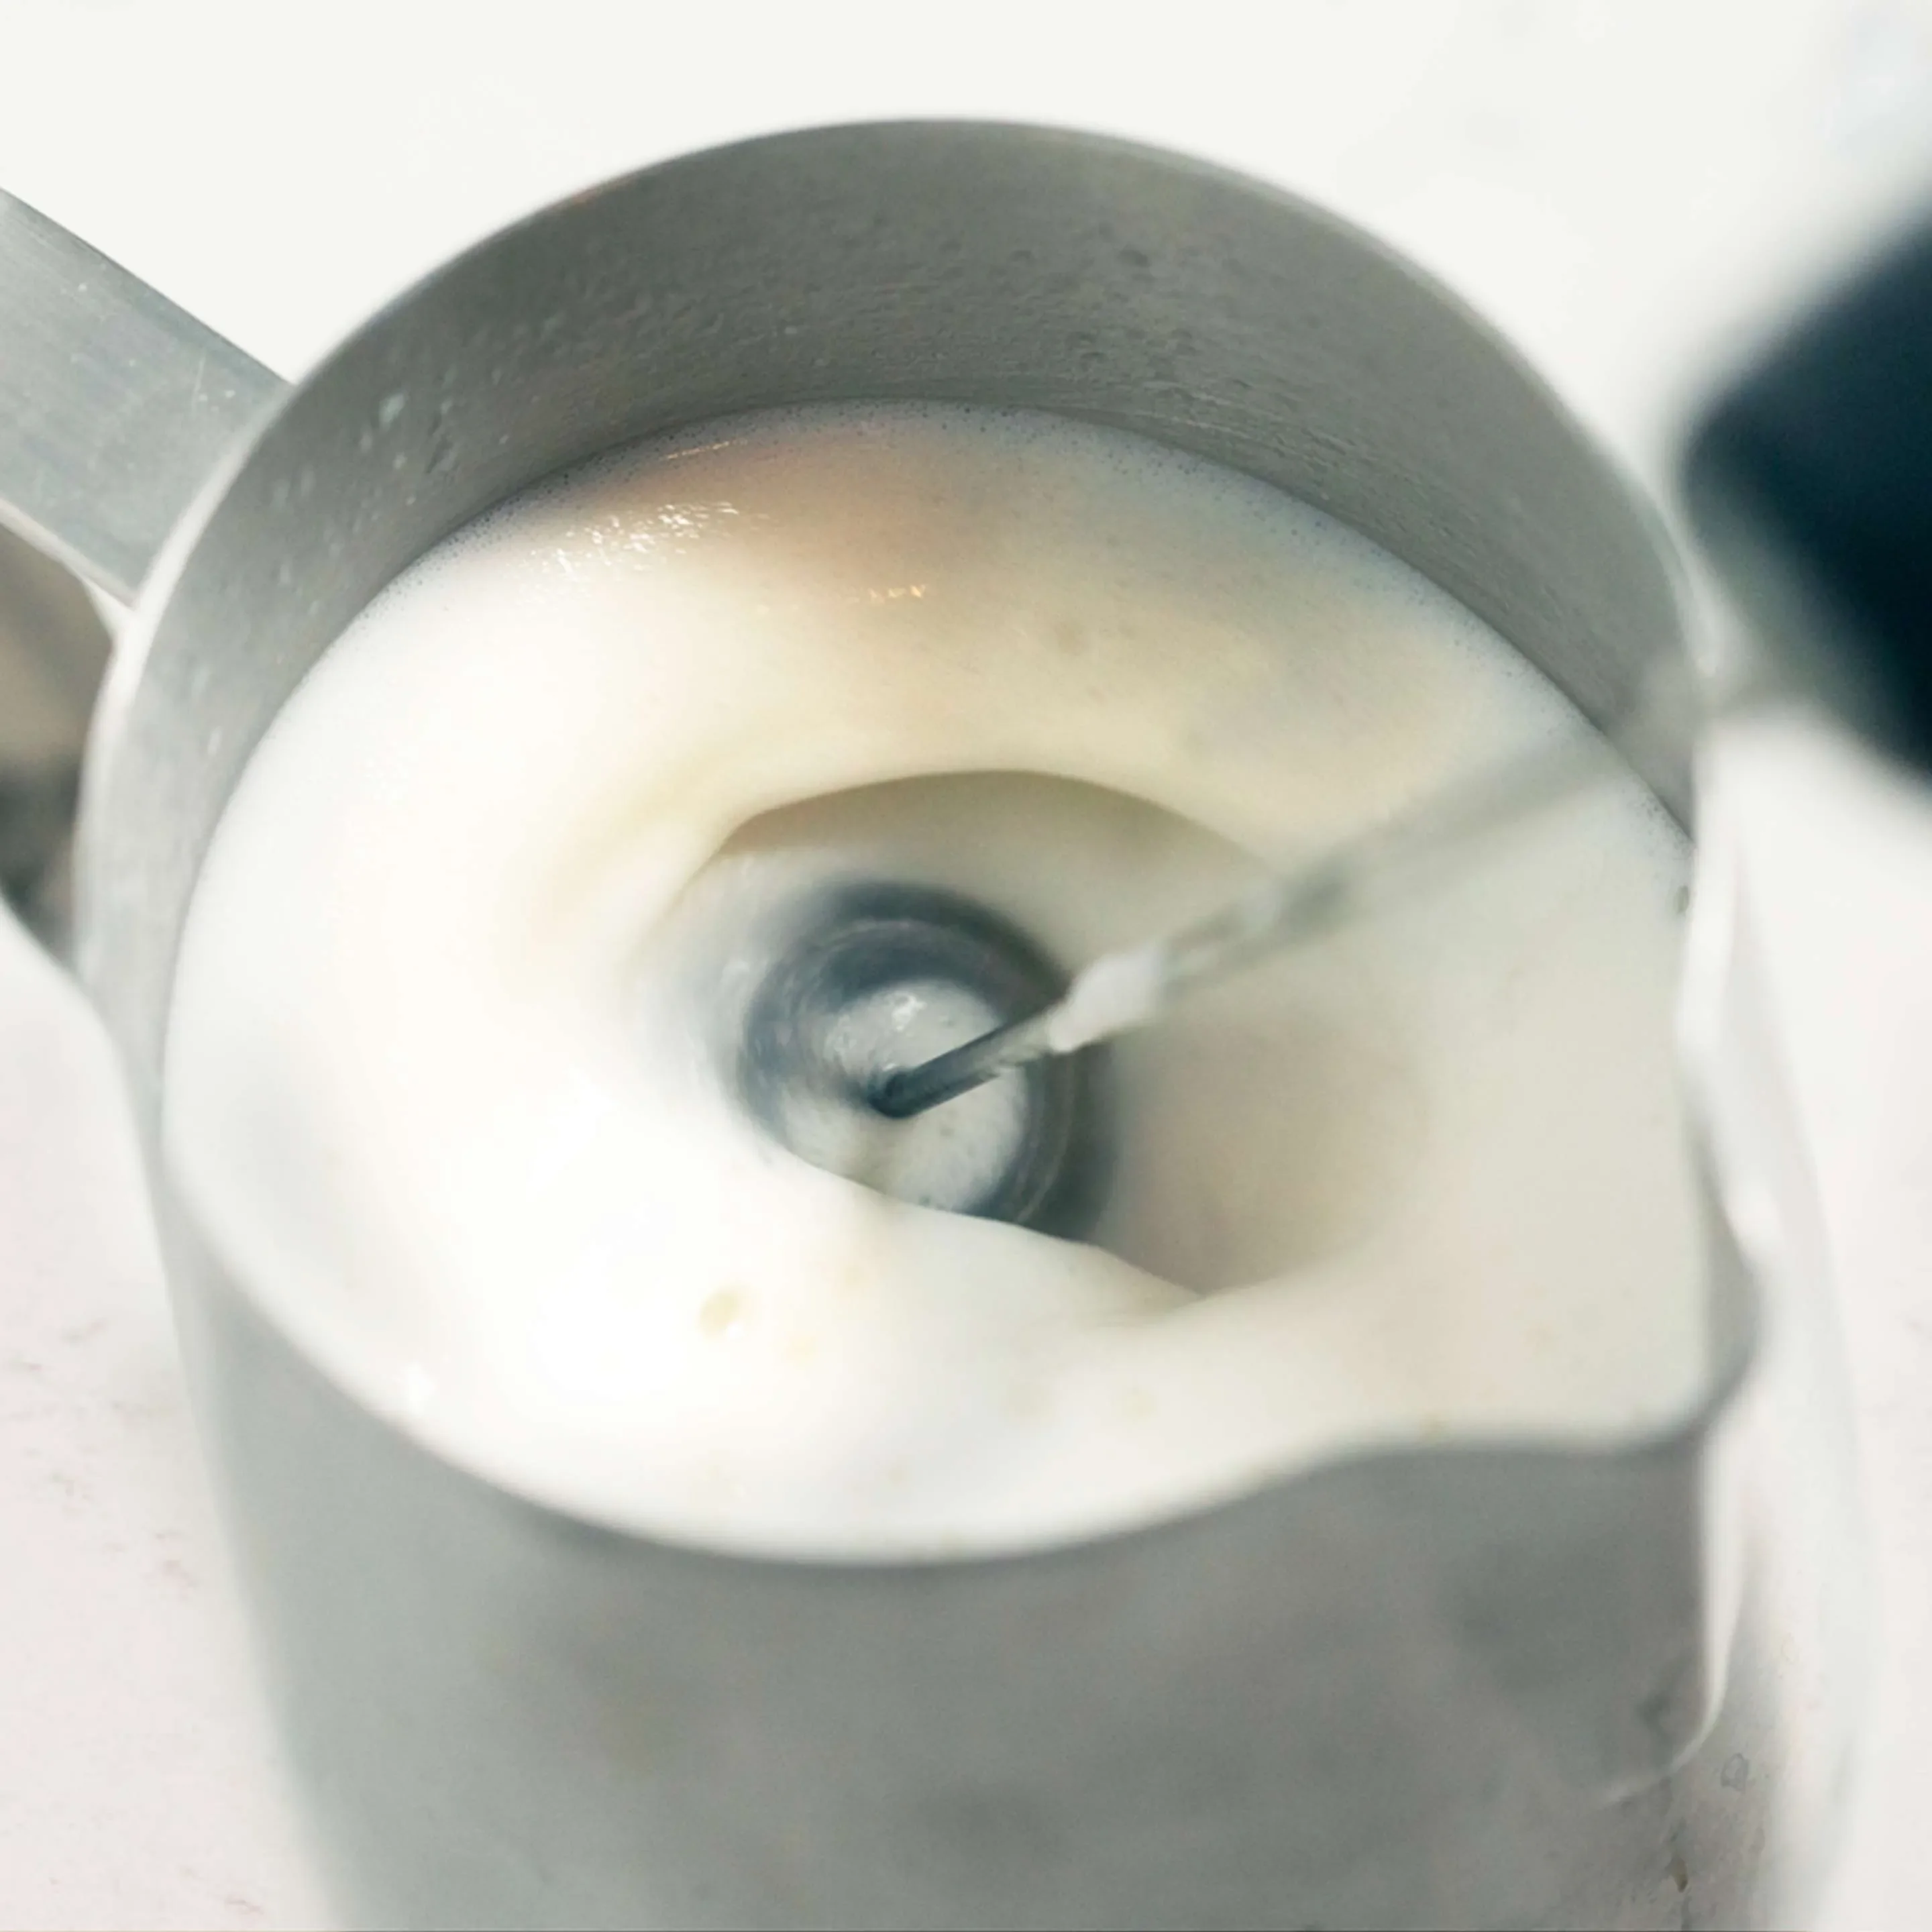 Toasted Marshmallow Café Au Lait Ingredient Image